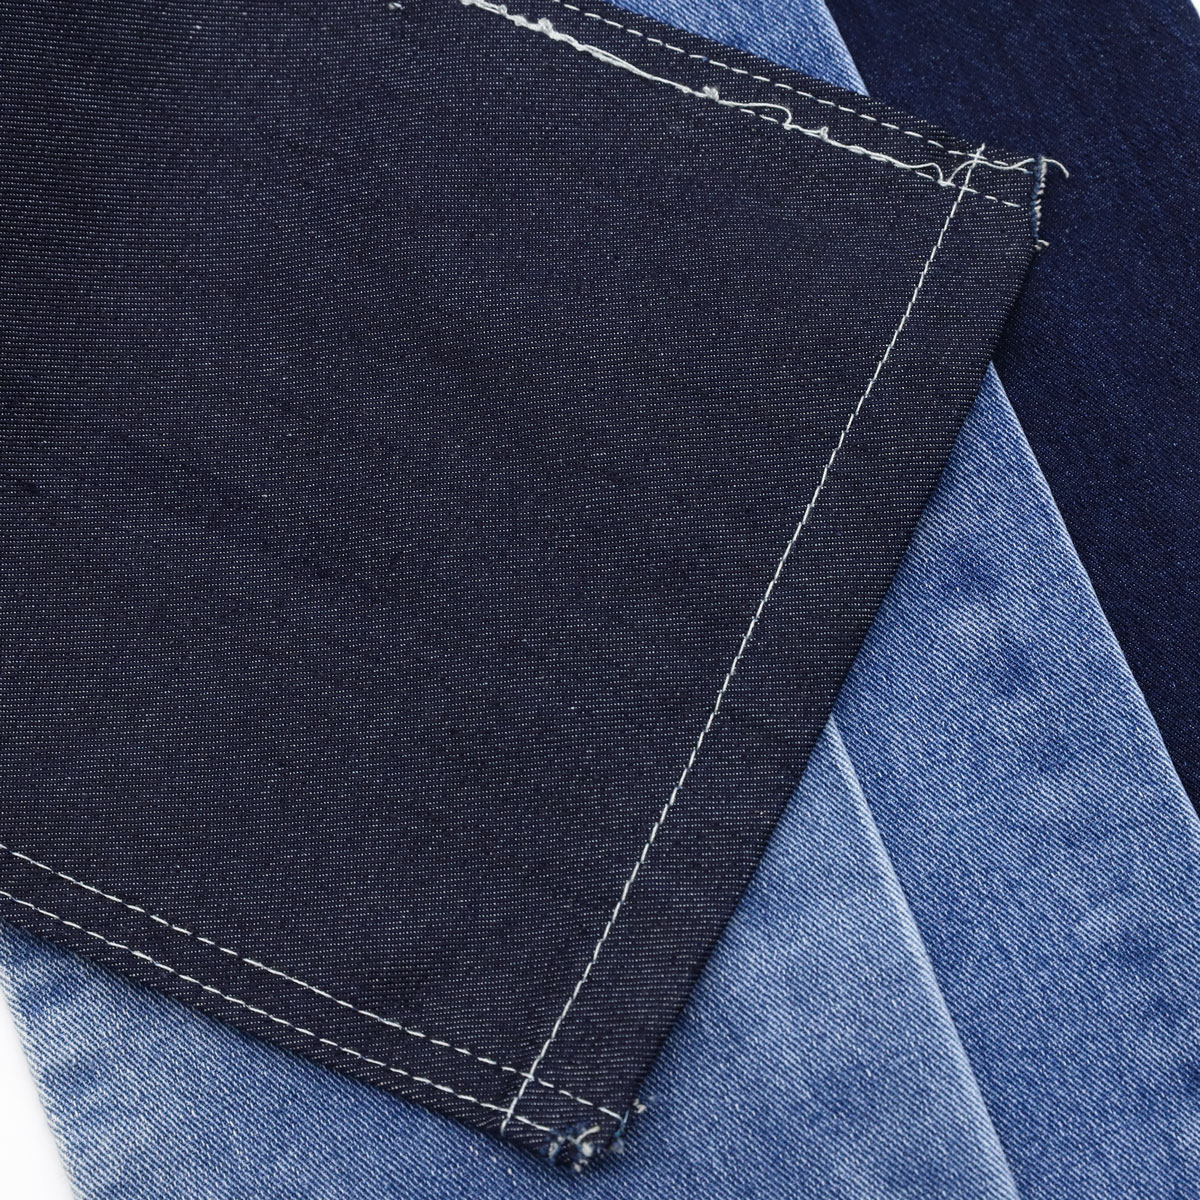 10 Useful Tips on Denim Fabric Textile 2